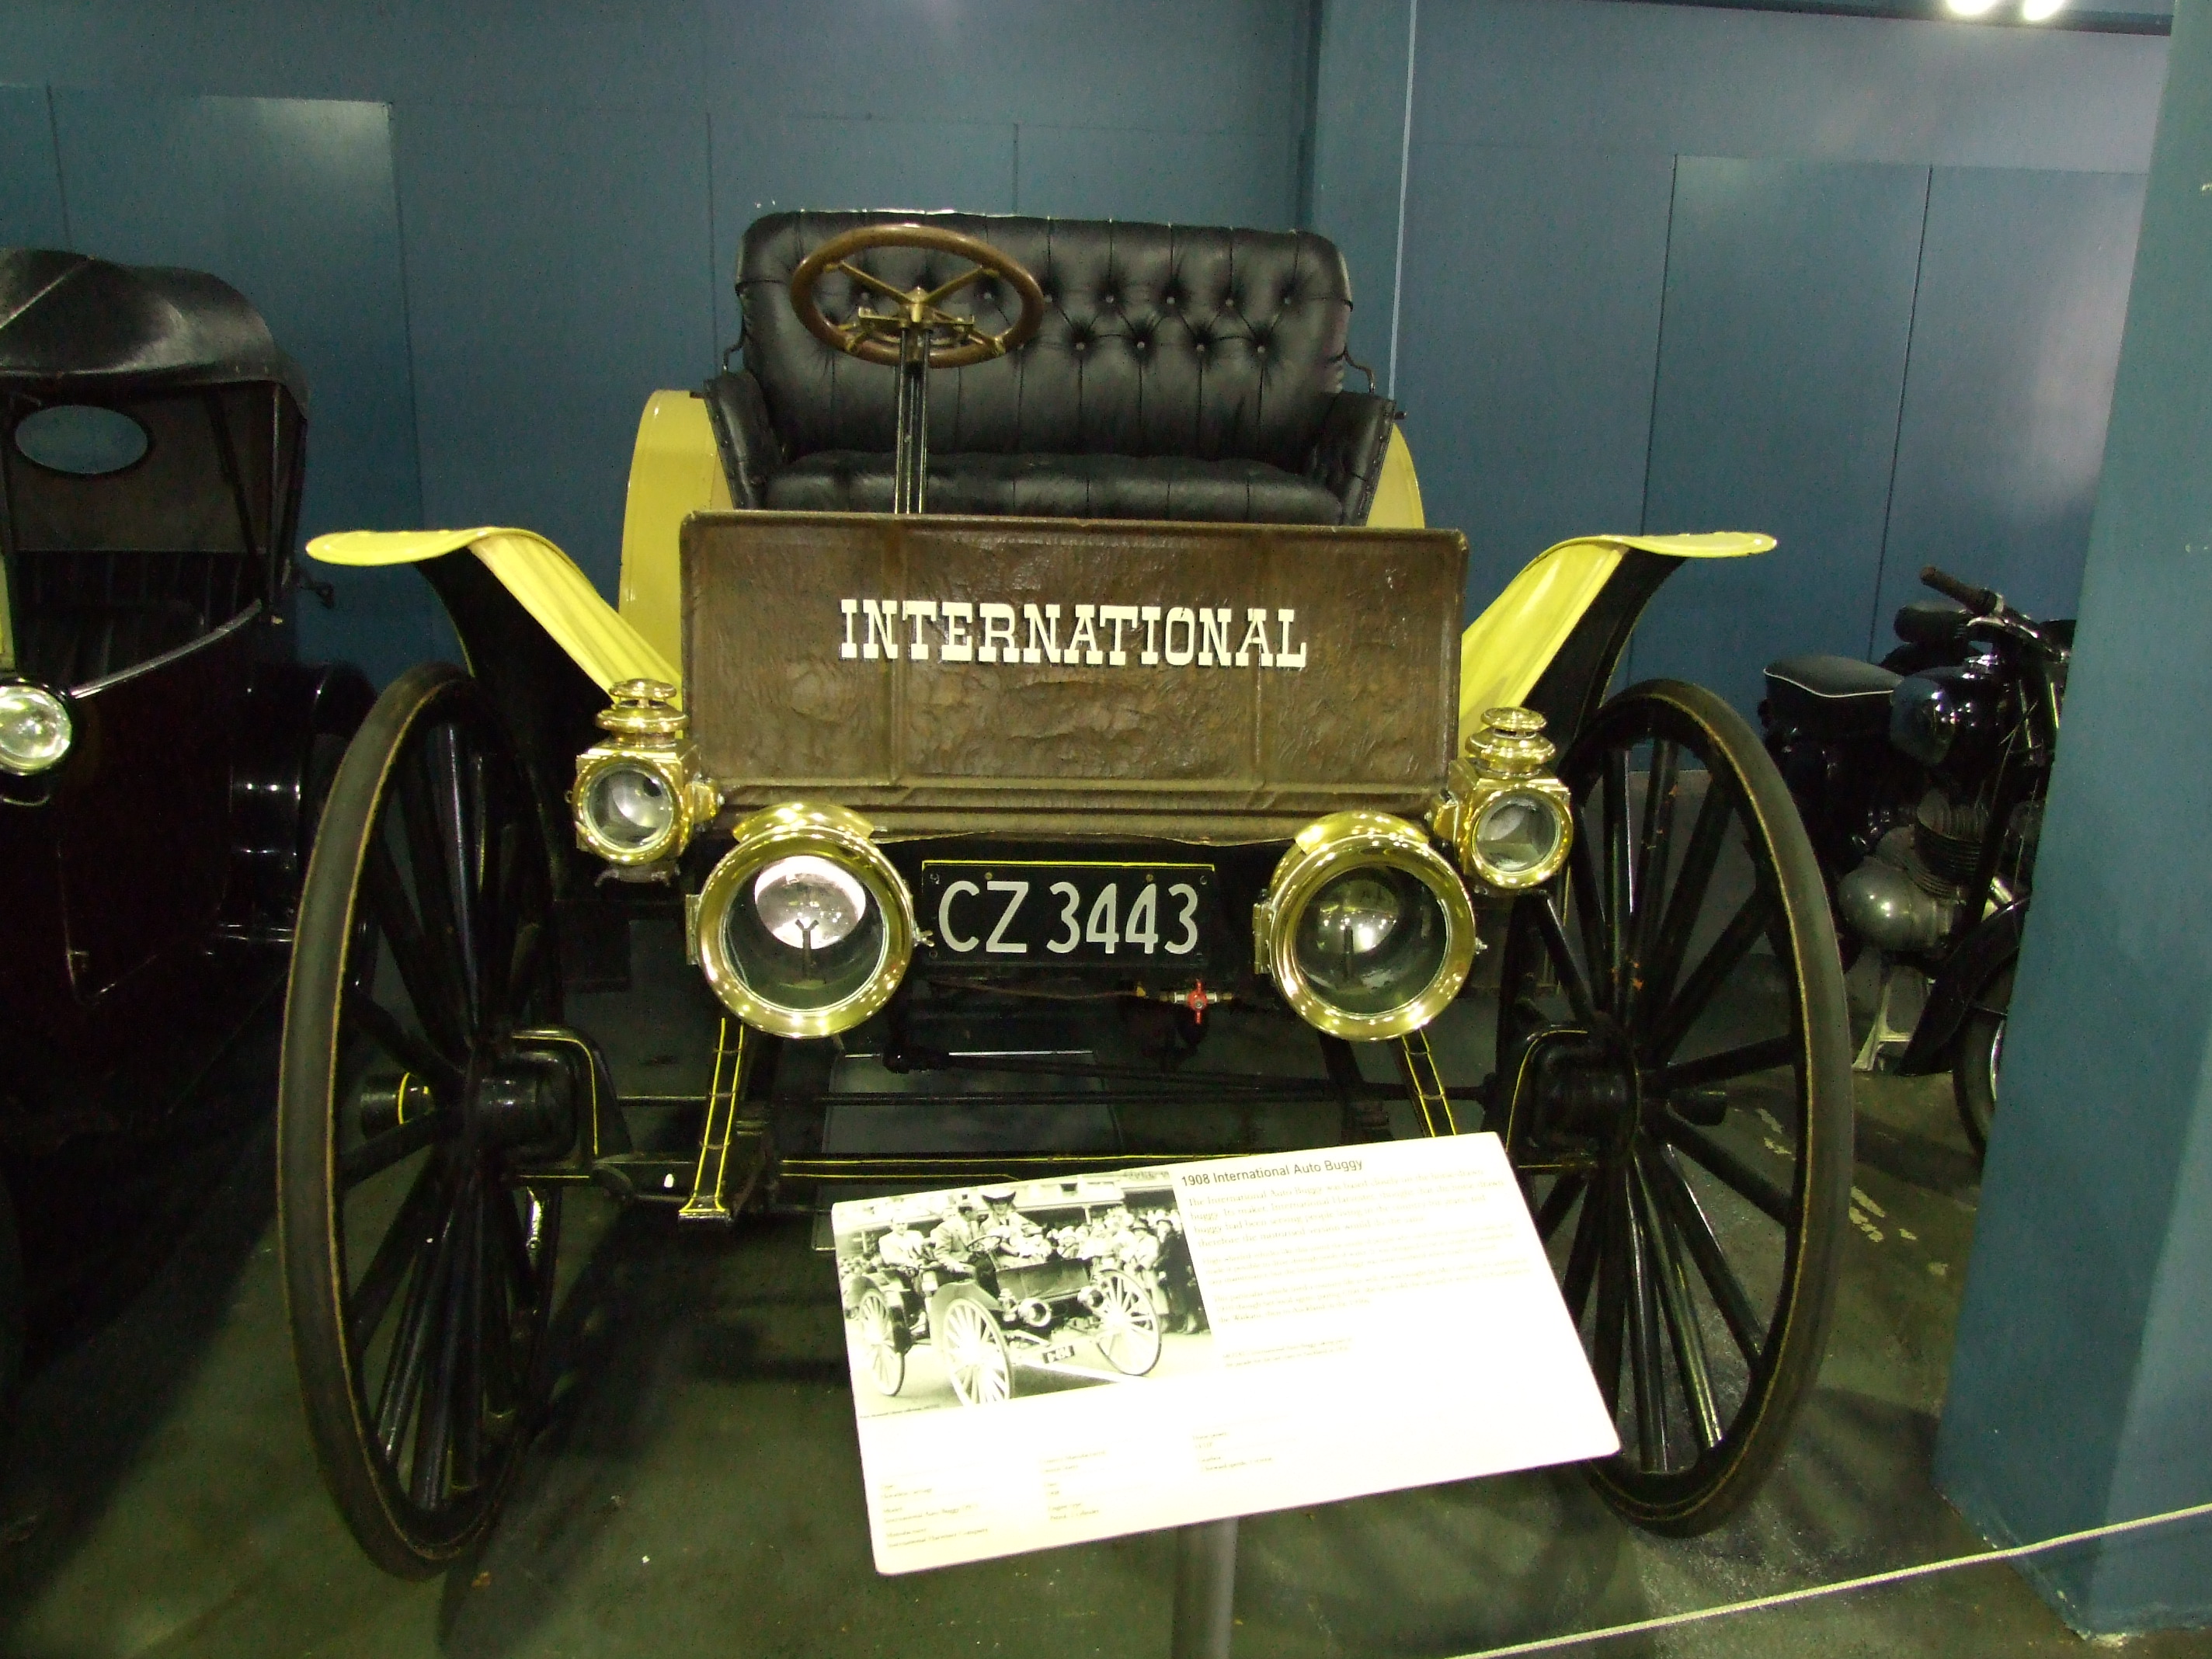 1908 International Auto Buggy Motat | Flickr - Photo Sharing!